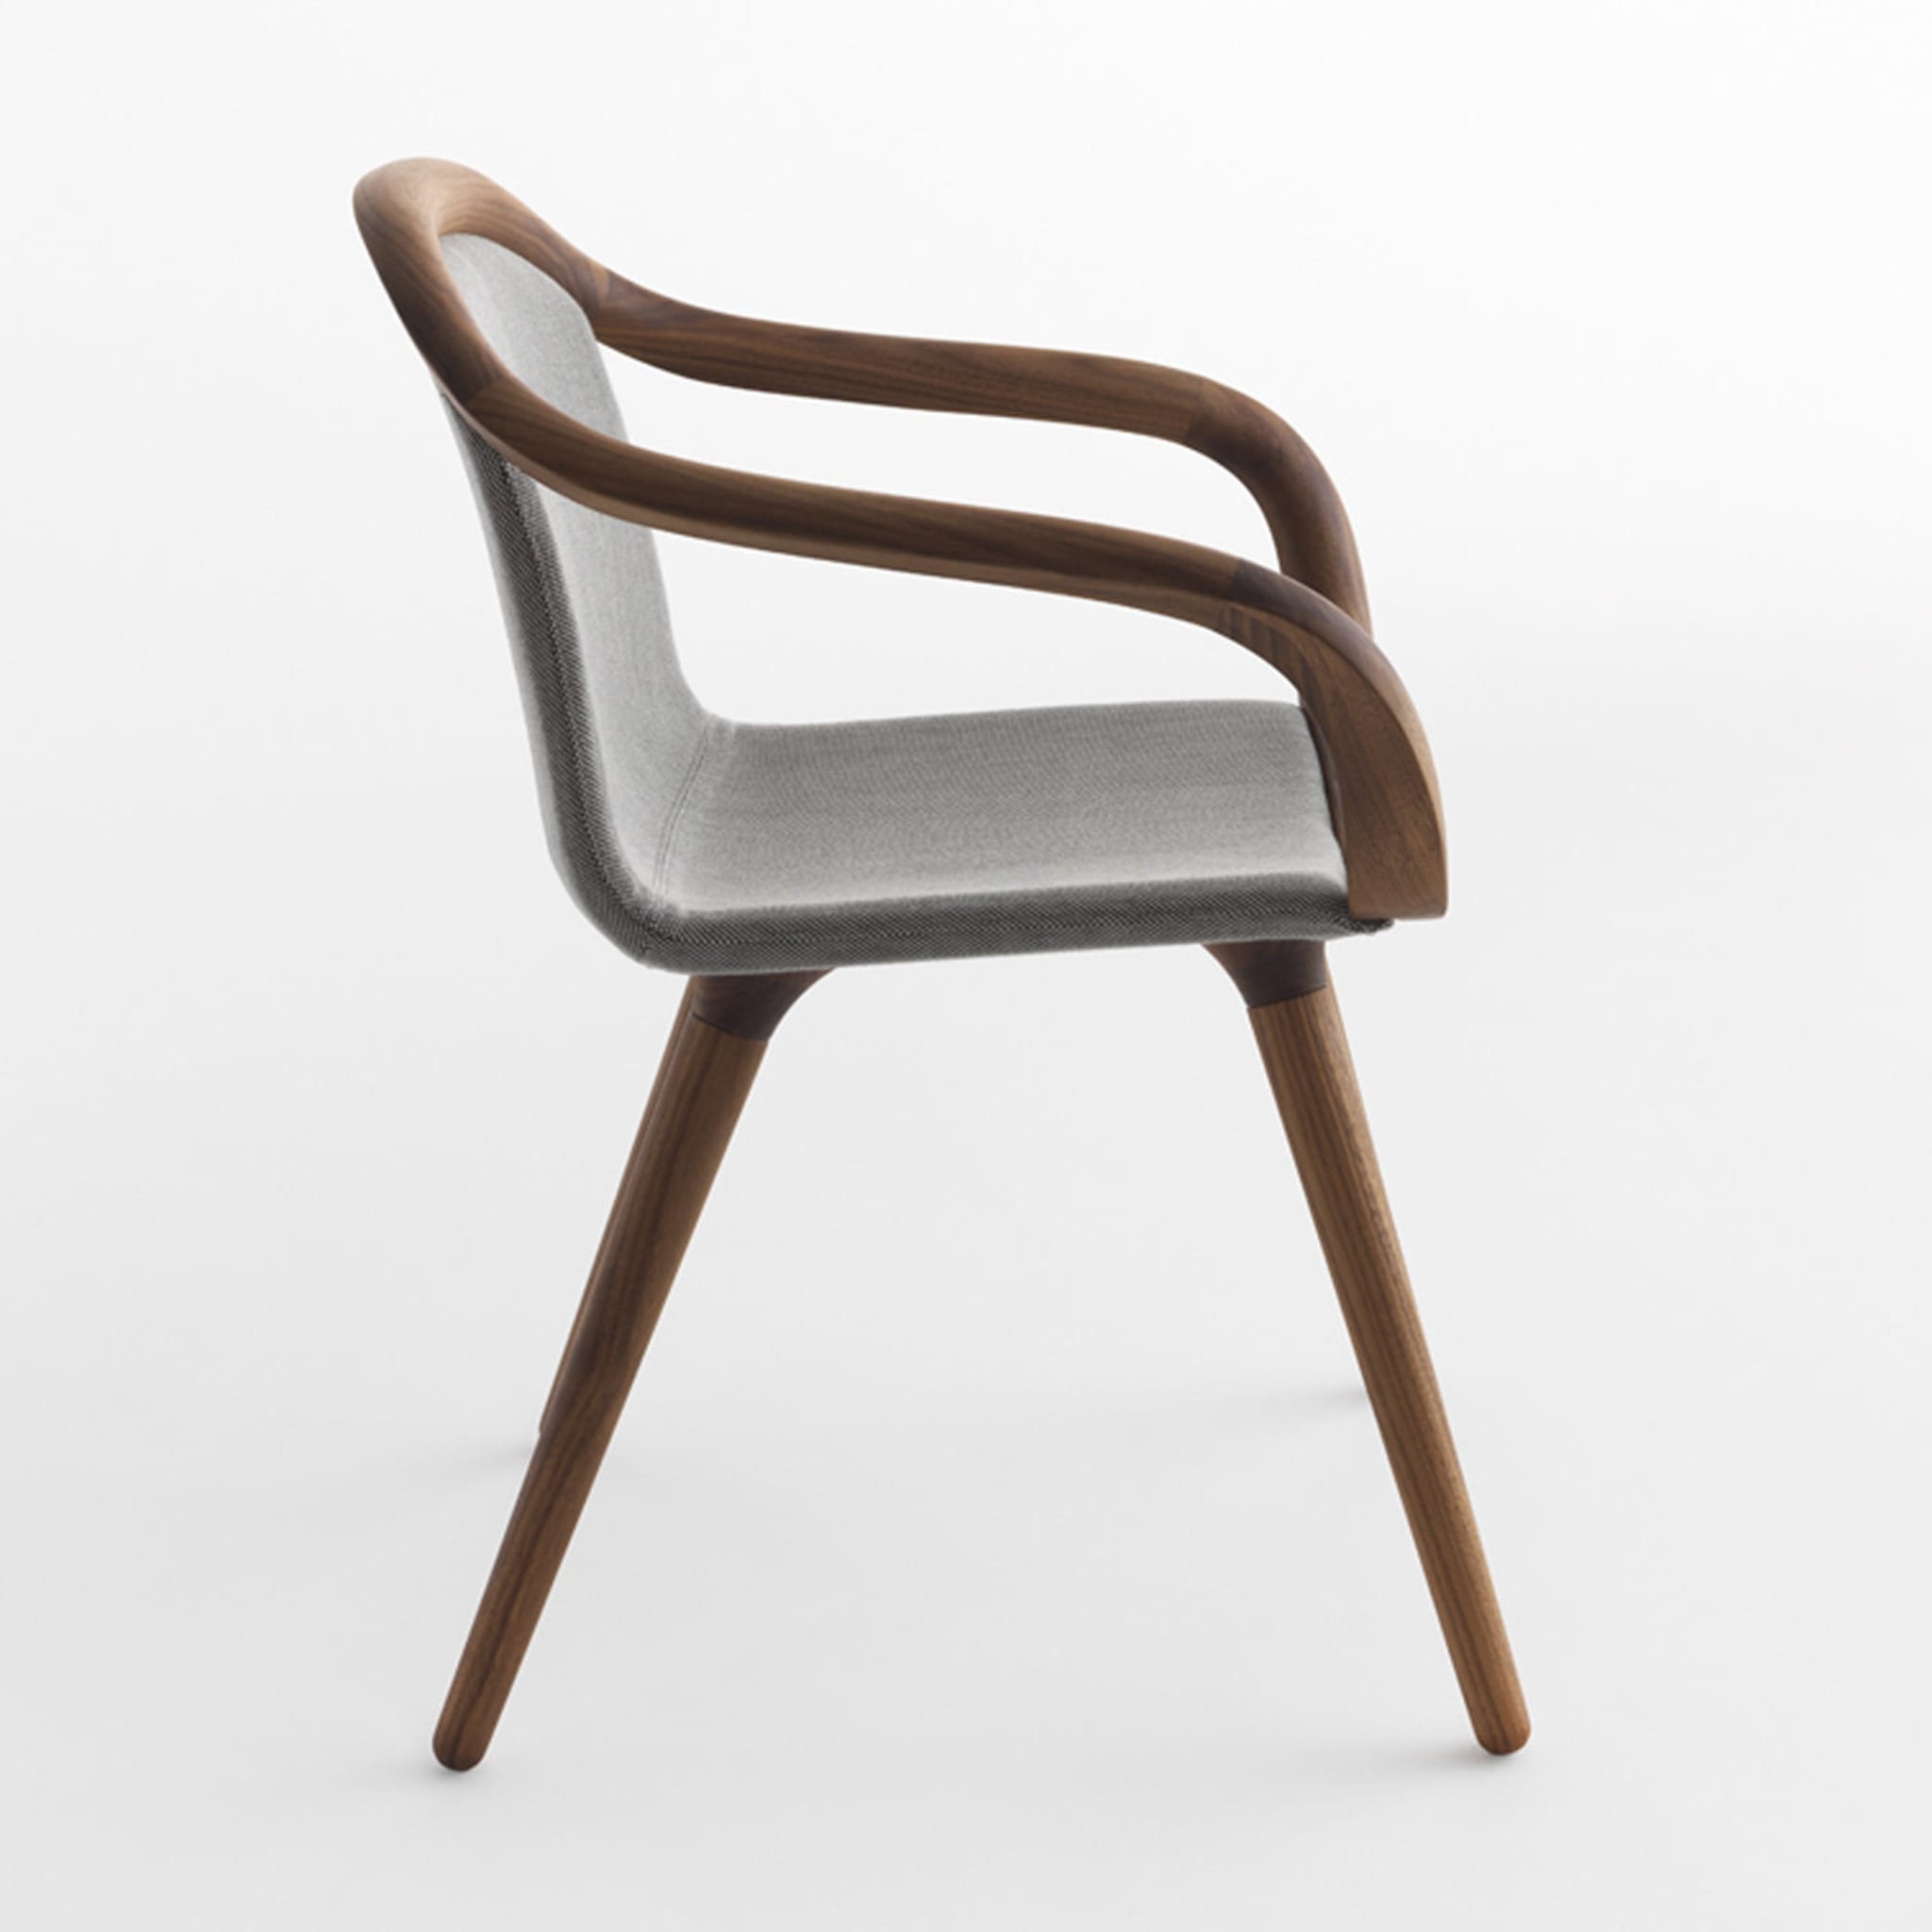 Ginevra Chair by Studio Balutto - Alternative view 2